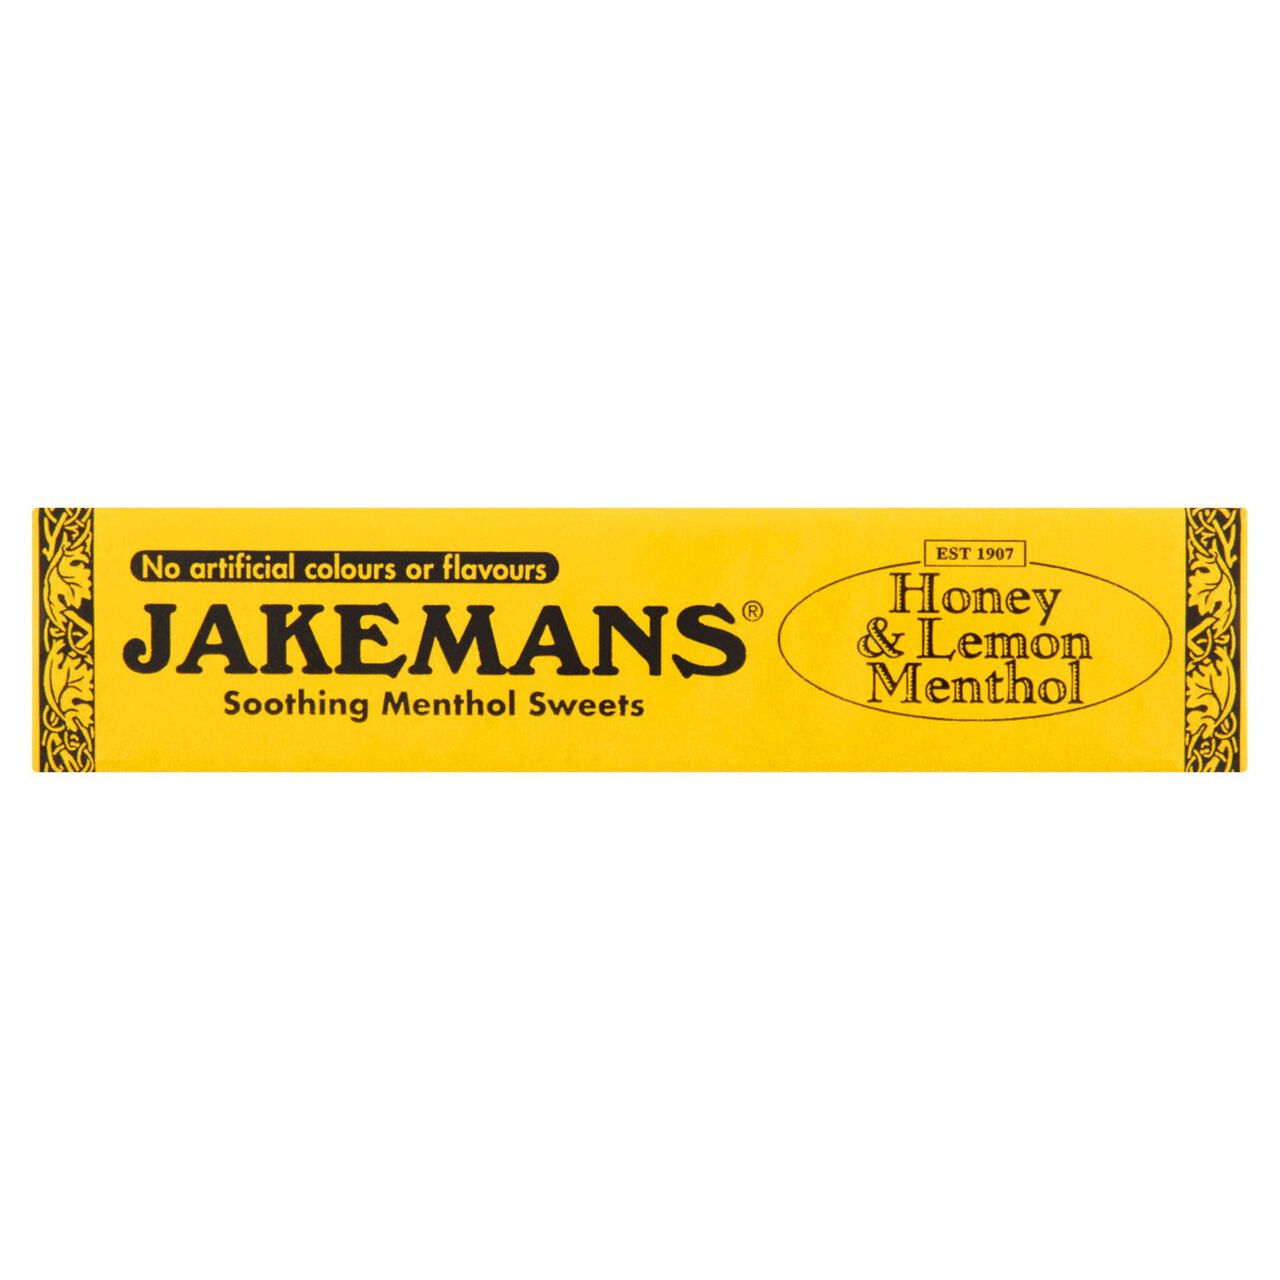 Jakemans Honey & Lemon Soothing Menthol Sweets